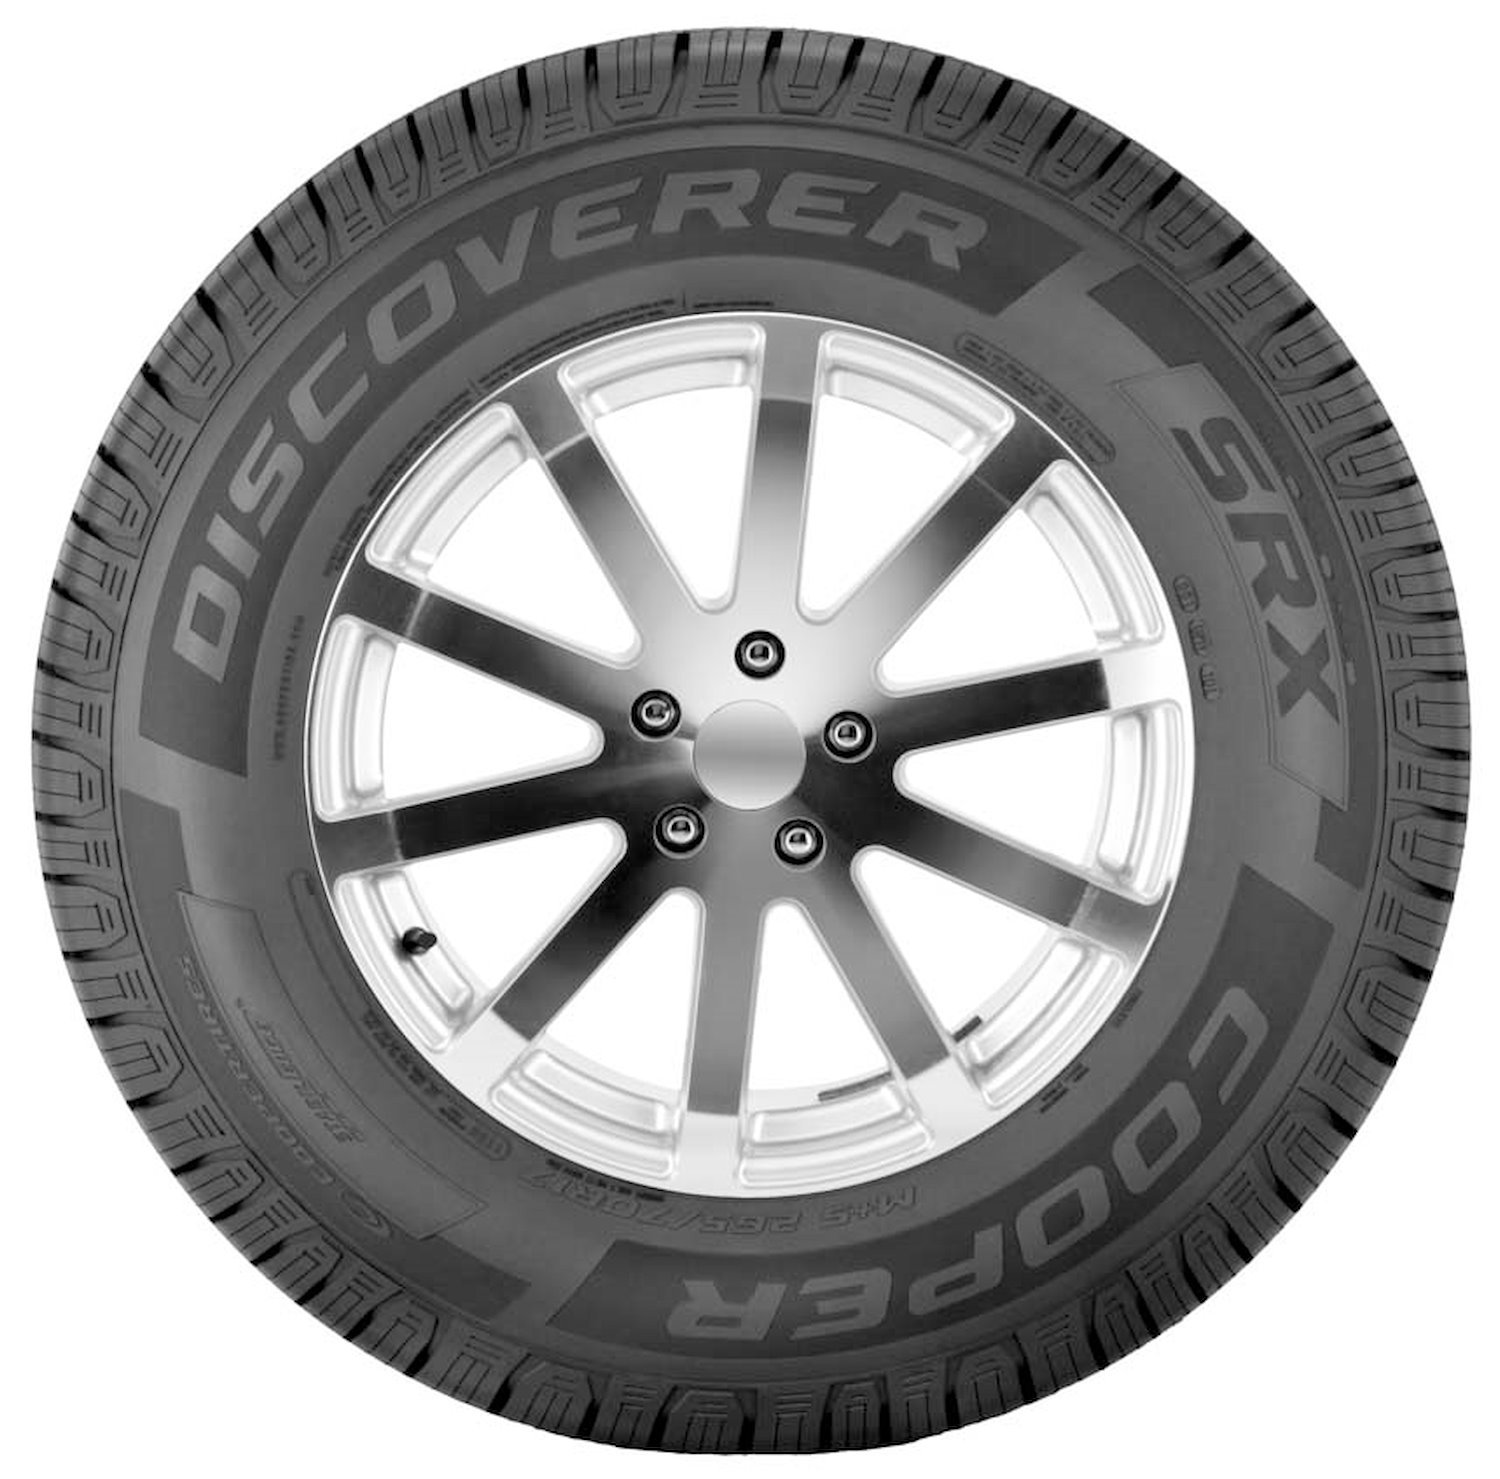 Discoverer SRX Commuter/Touring Tire, 265/65R18